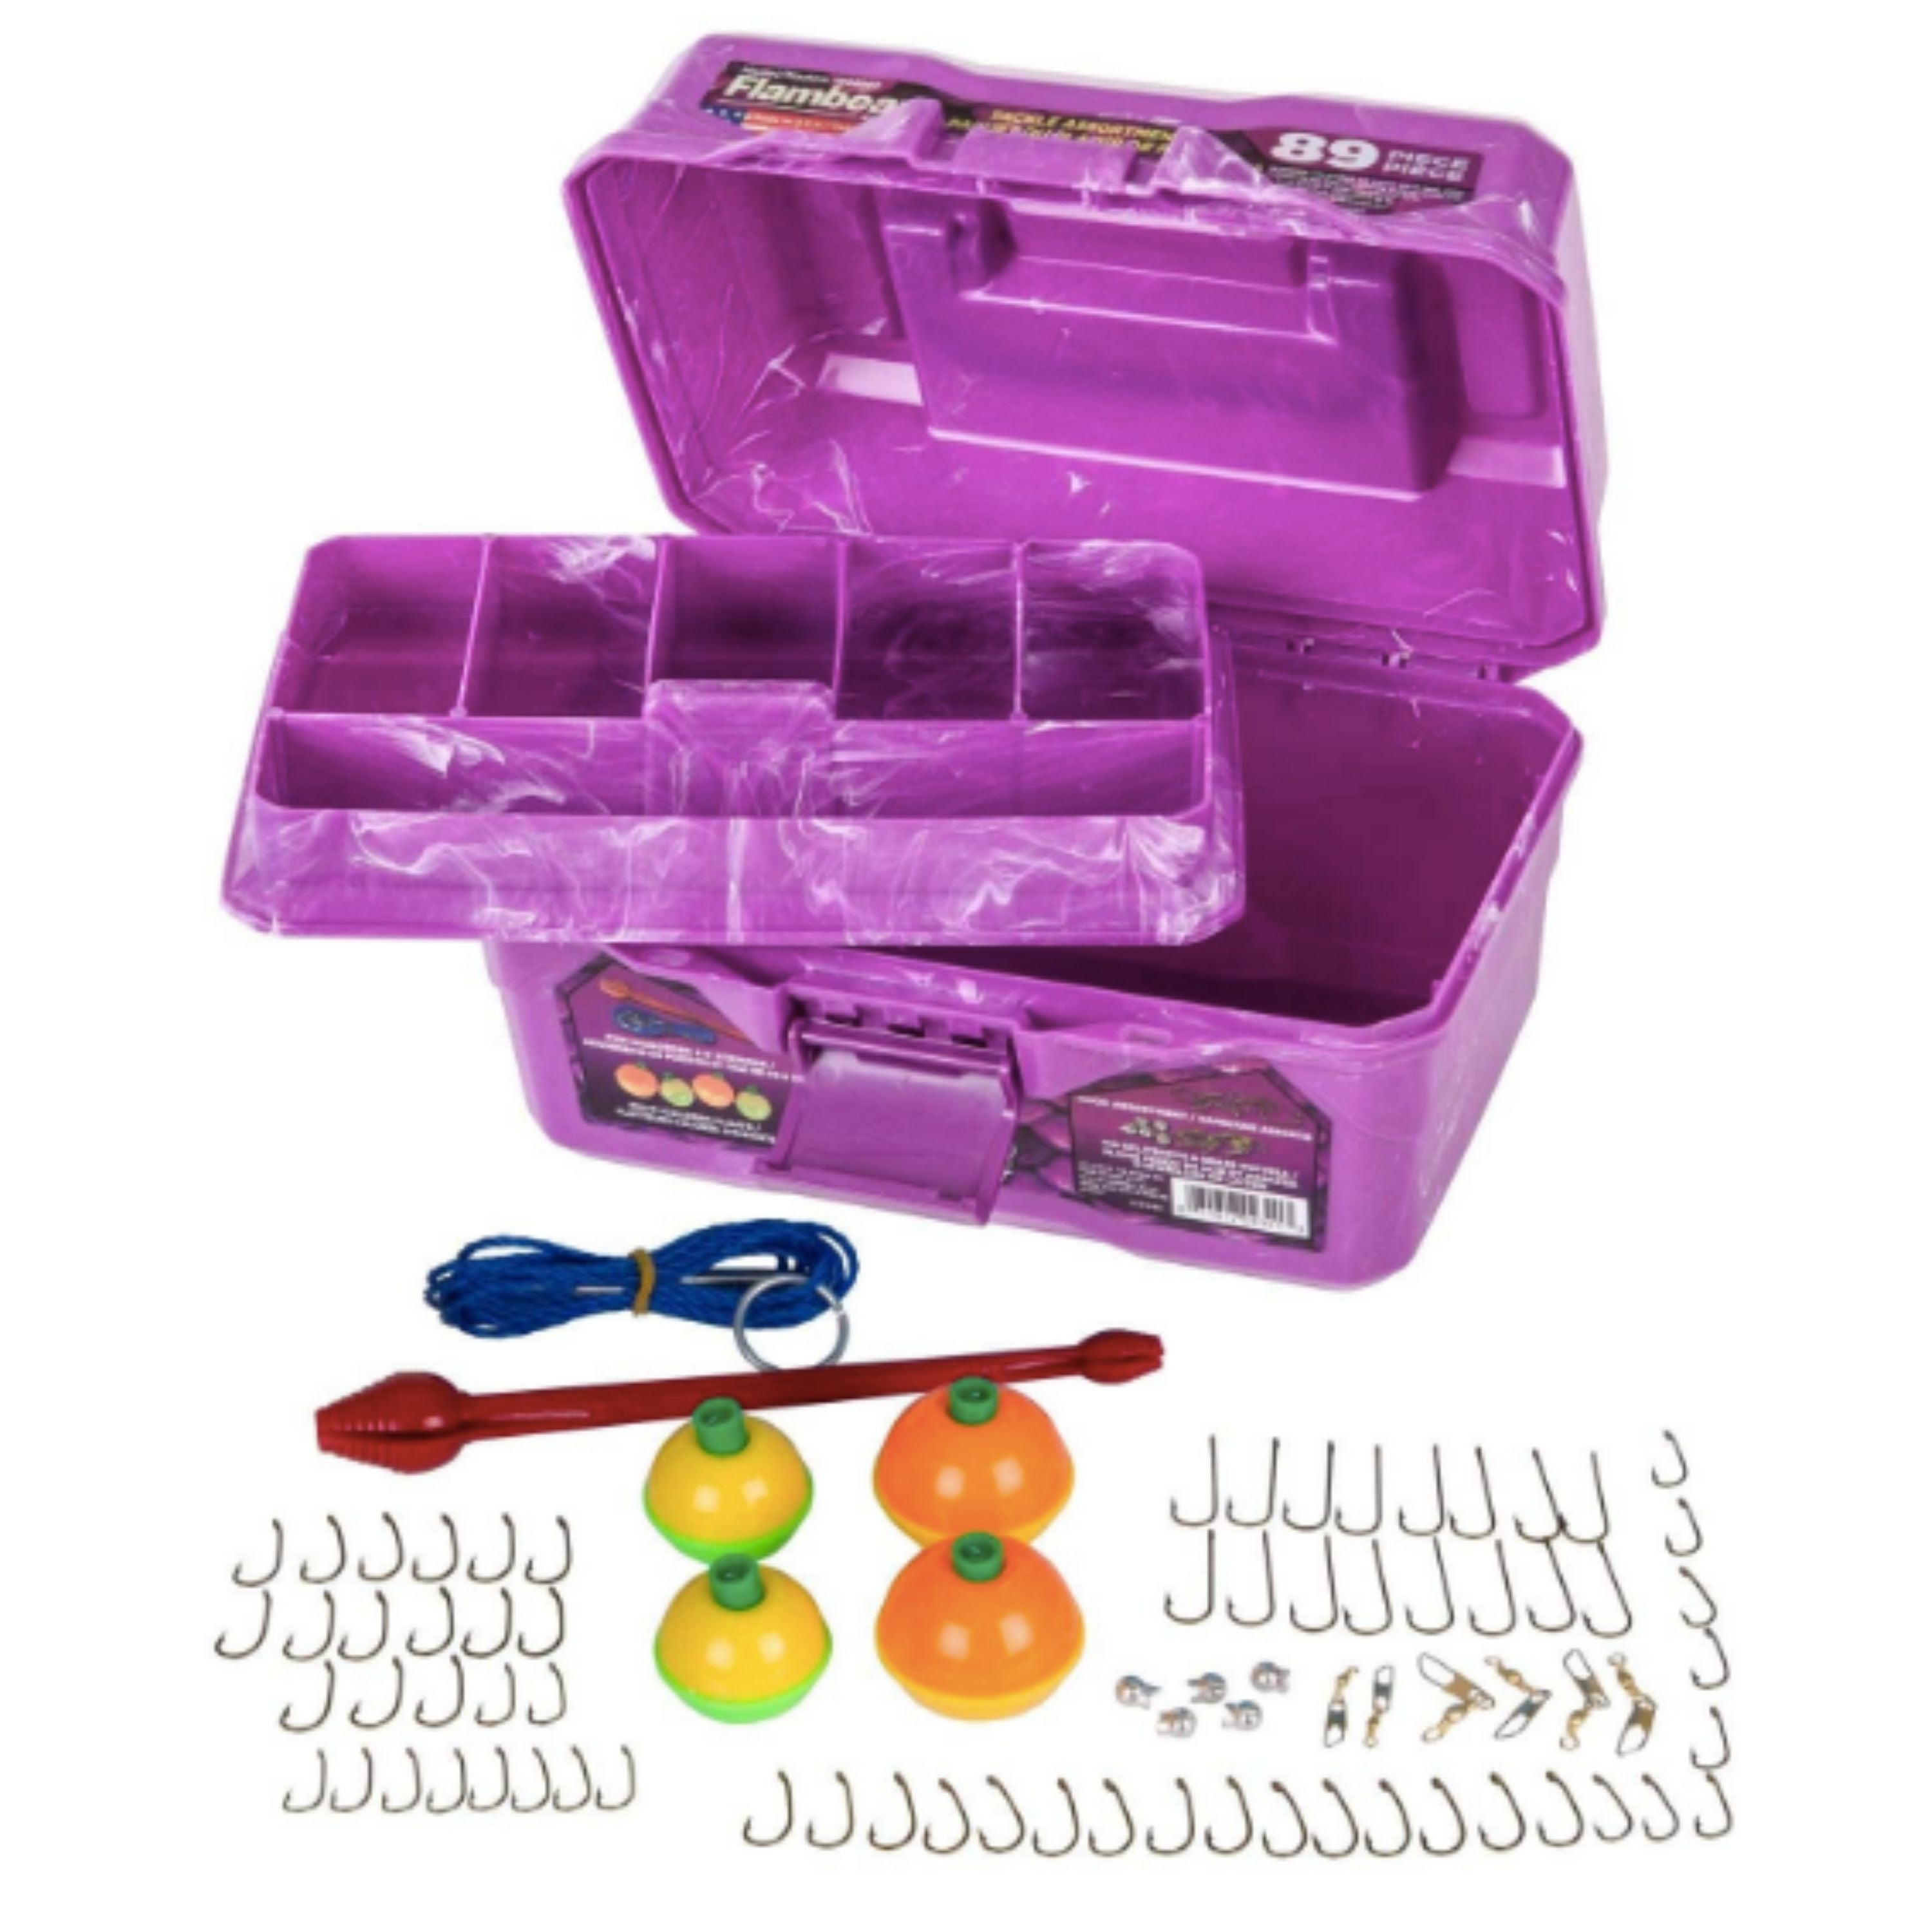 Big Mouth Tackle Box Kit - 89 pieces